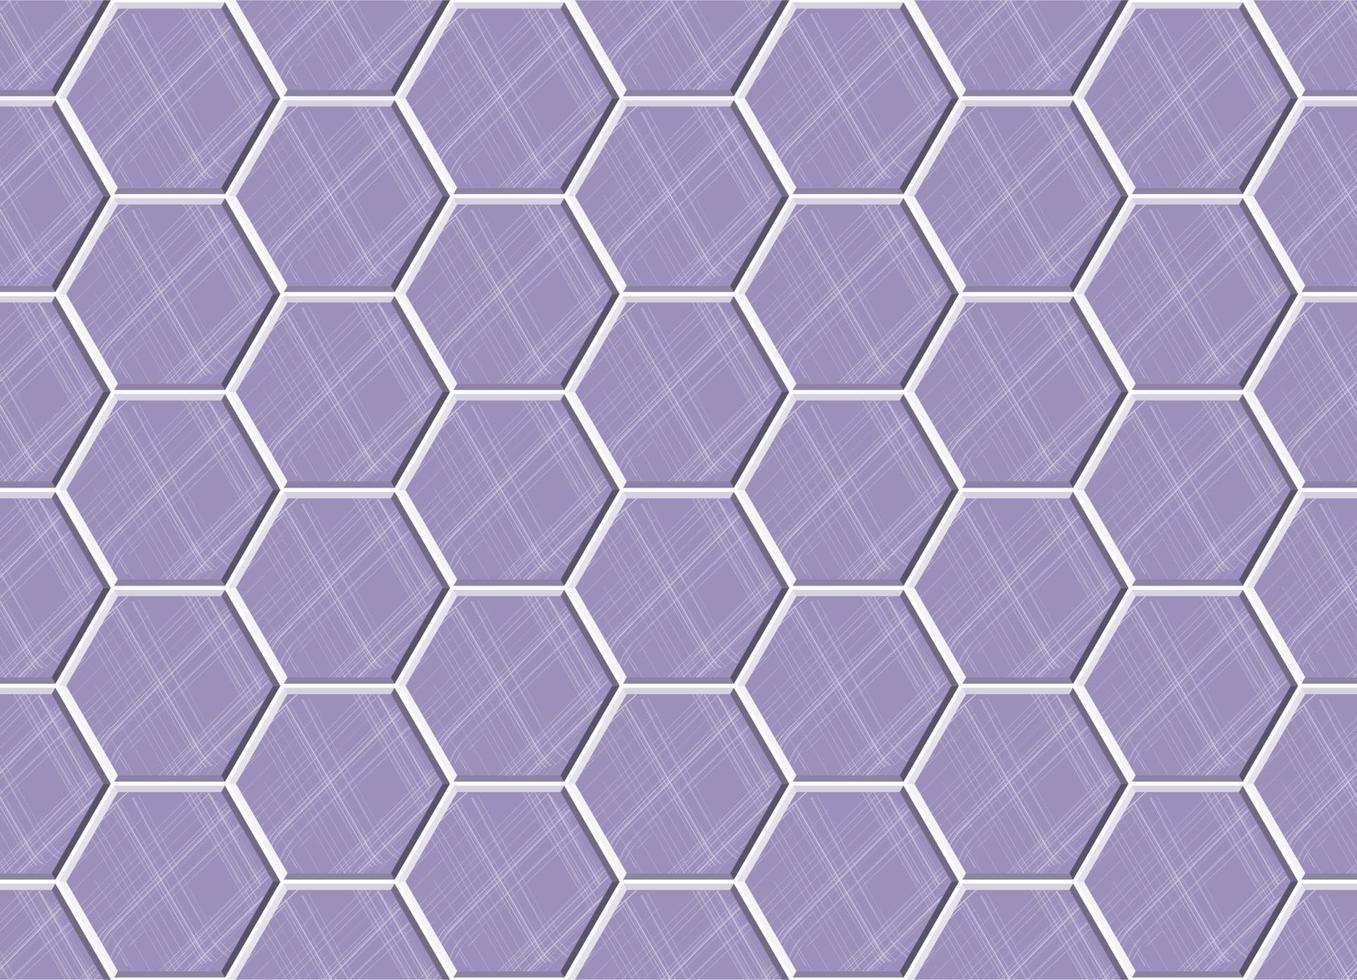 Abstract seamless pattern, purple ceramic tiles floor. Concrete hexagonal paver blocks. Design geometric mosaic texture for the decoration of the bathroom, vector illustration